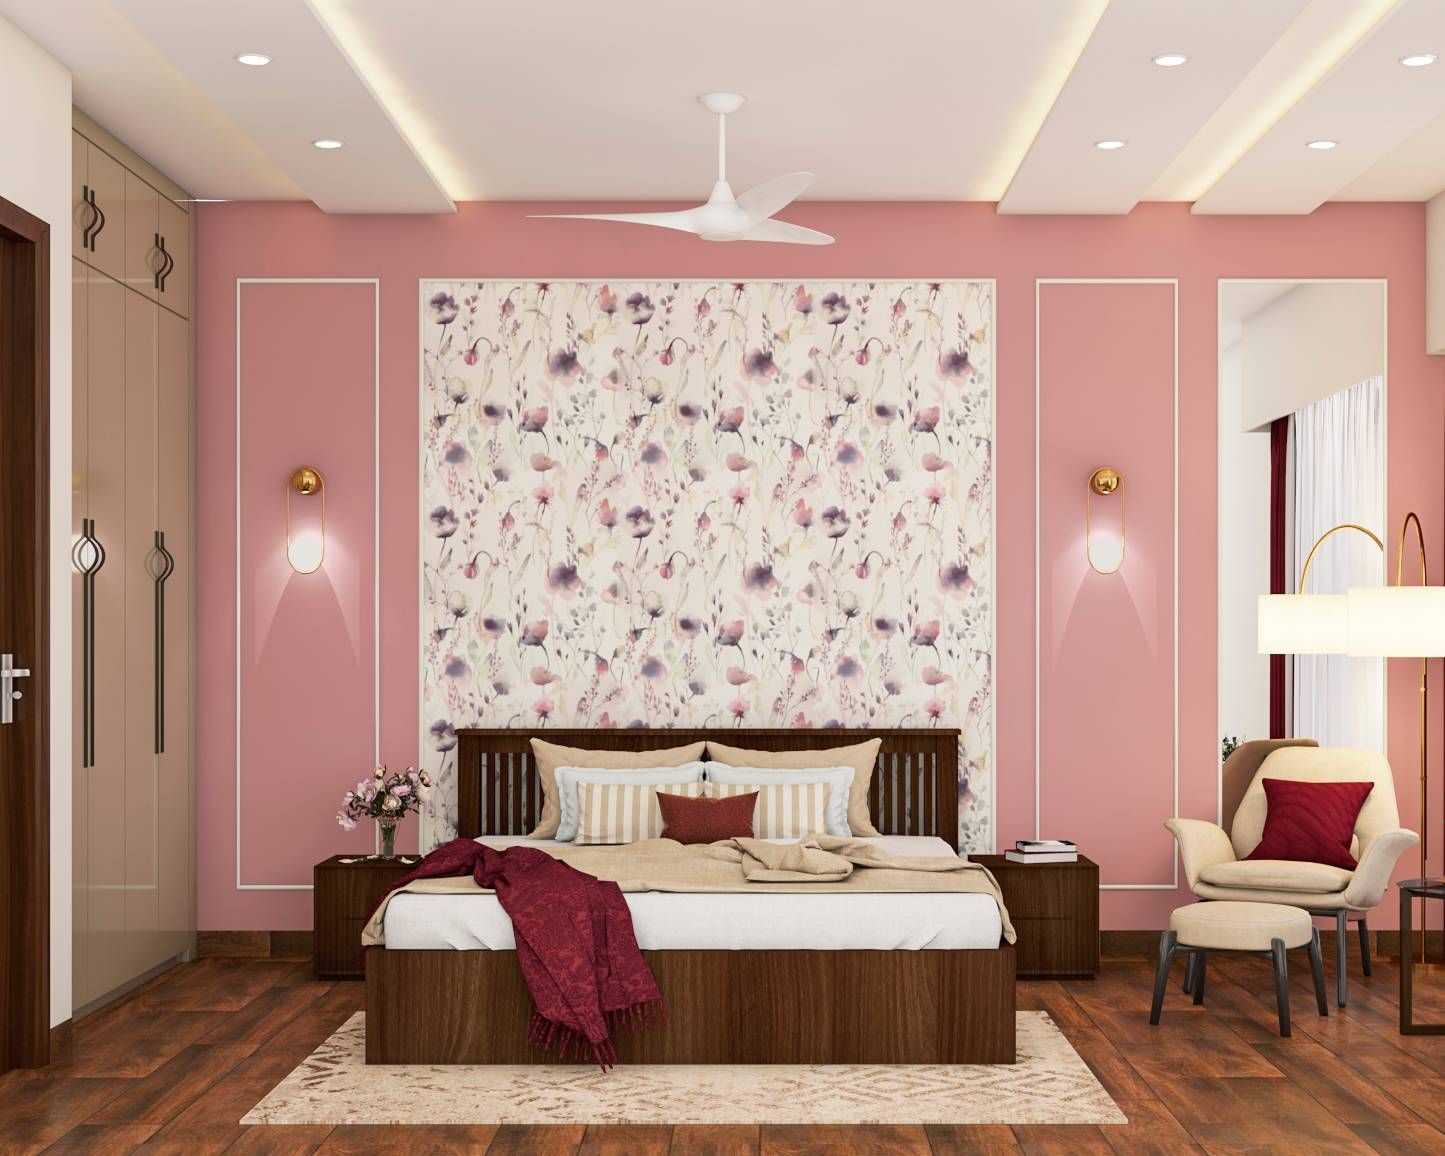 Modern Master Bedroom Design With Floral Patterns And Dressing Unit